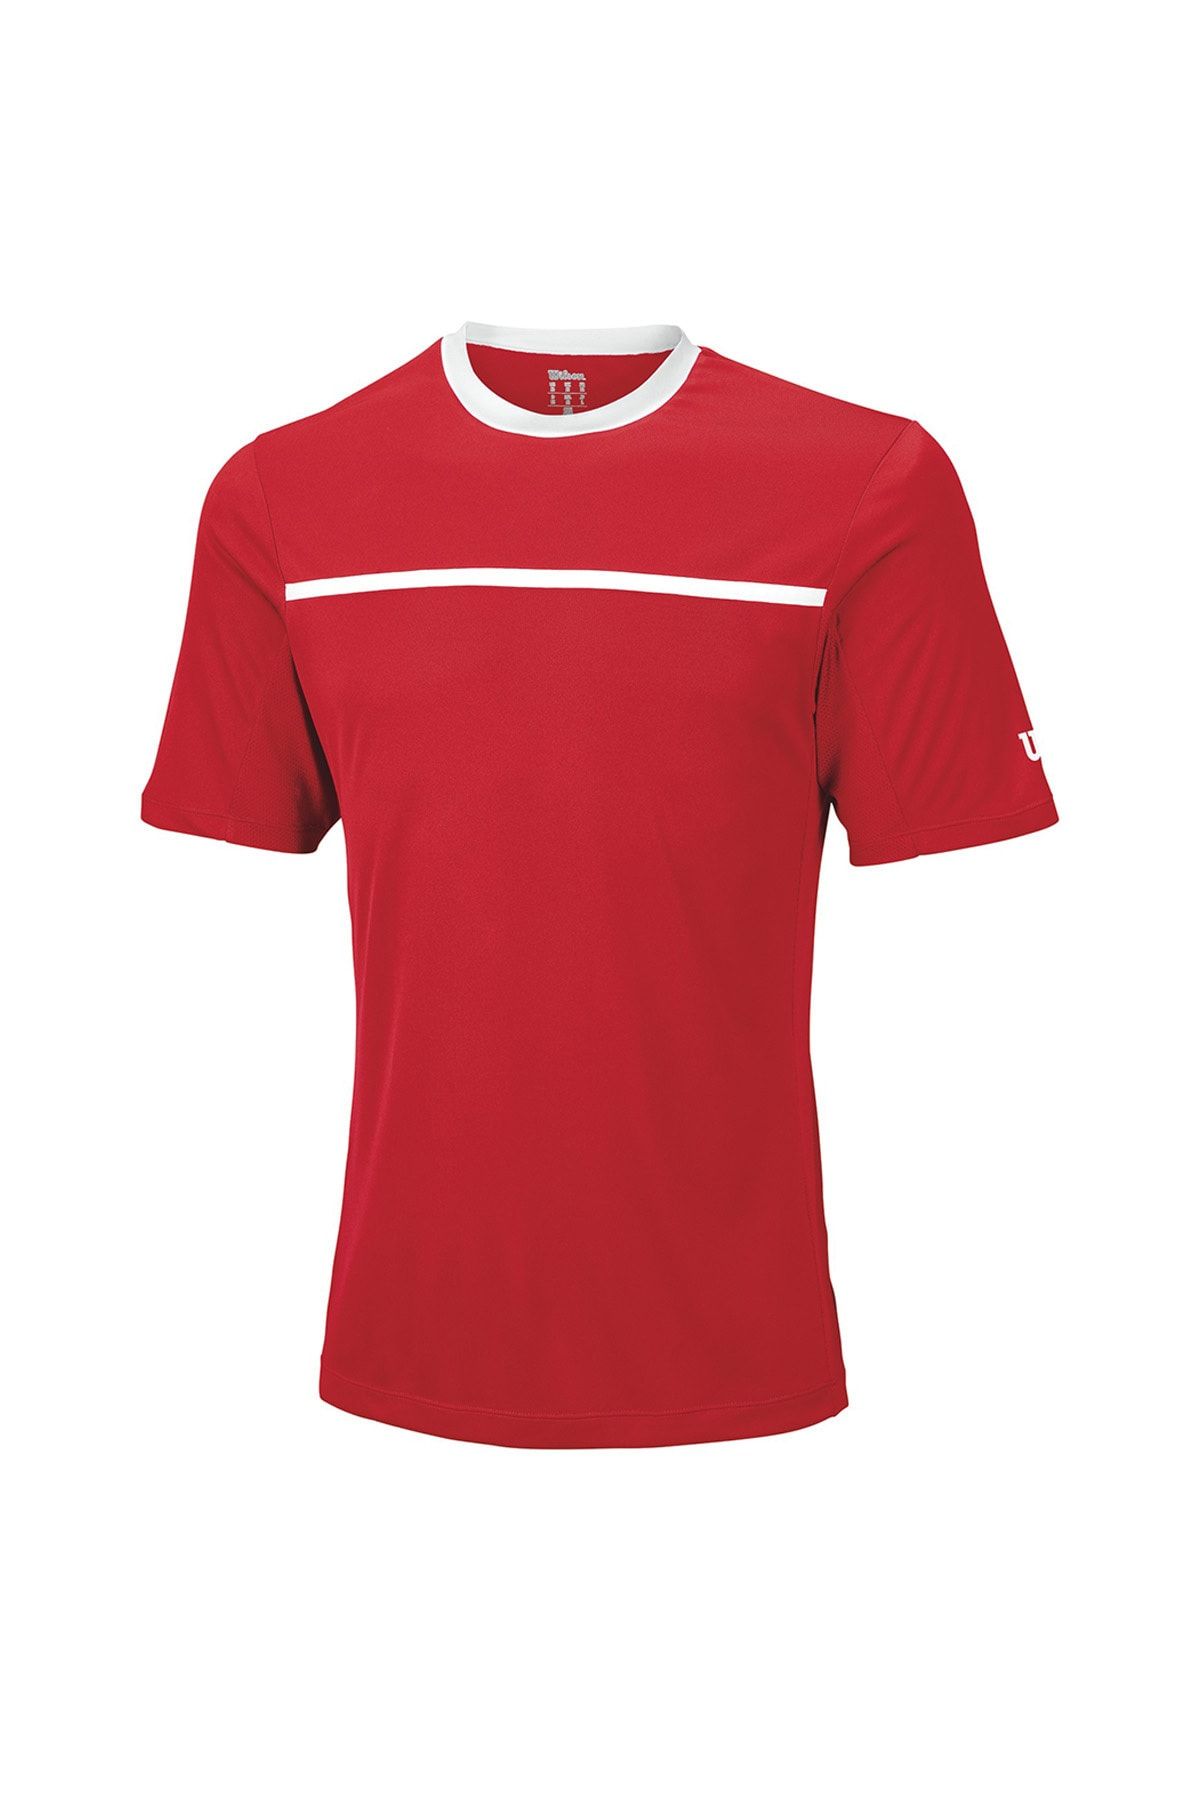 Wilson Erkek Team Crew  Kırmızı-Beyaz T-Shirt WRA725102